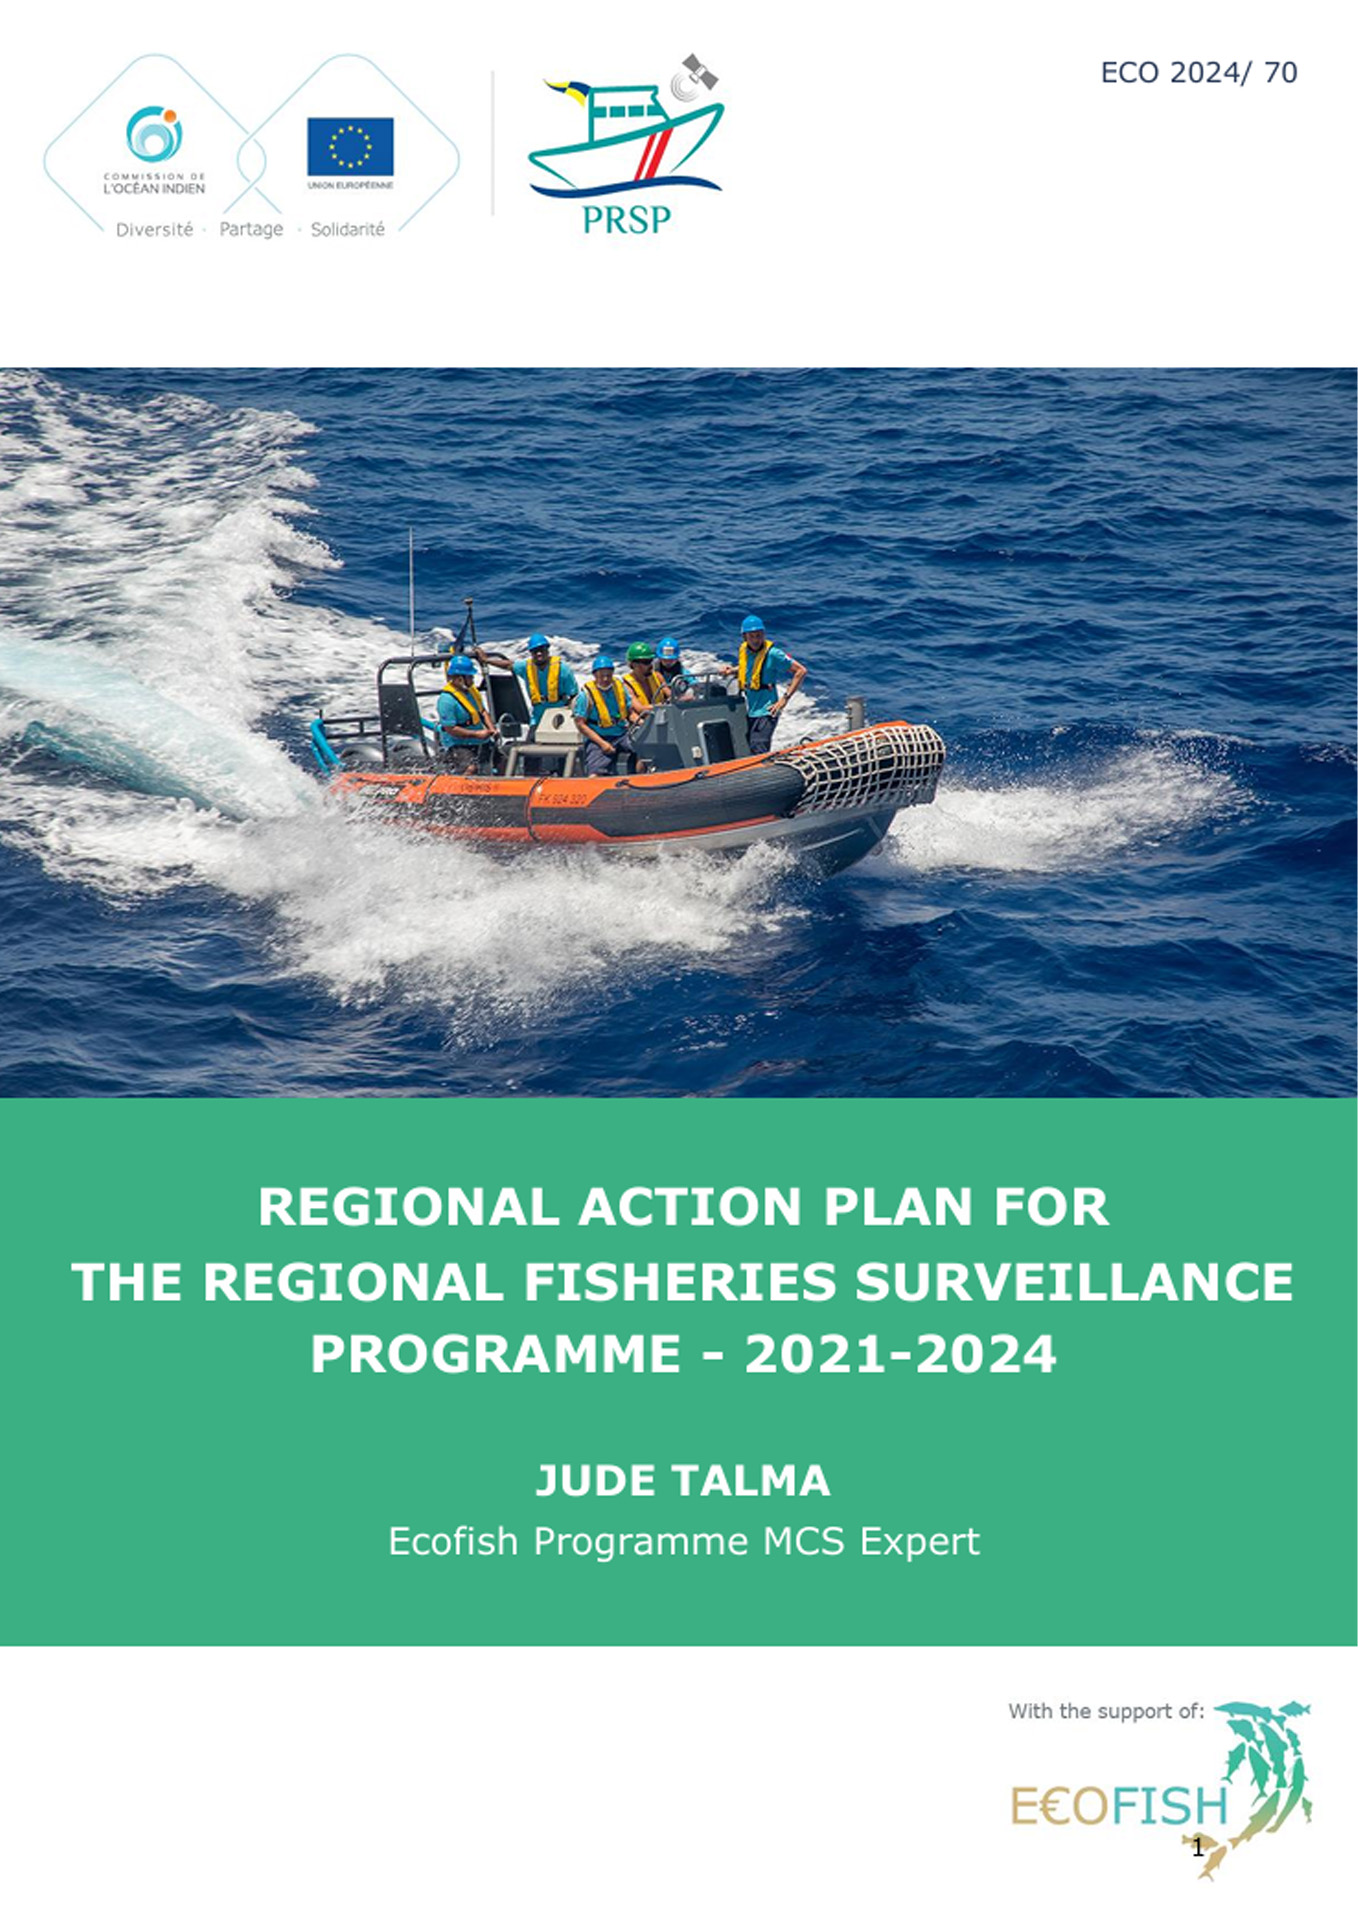 The Regional Fisheries Surveillance Programme